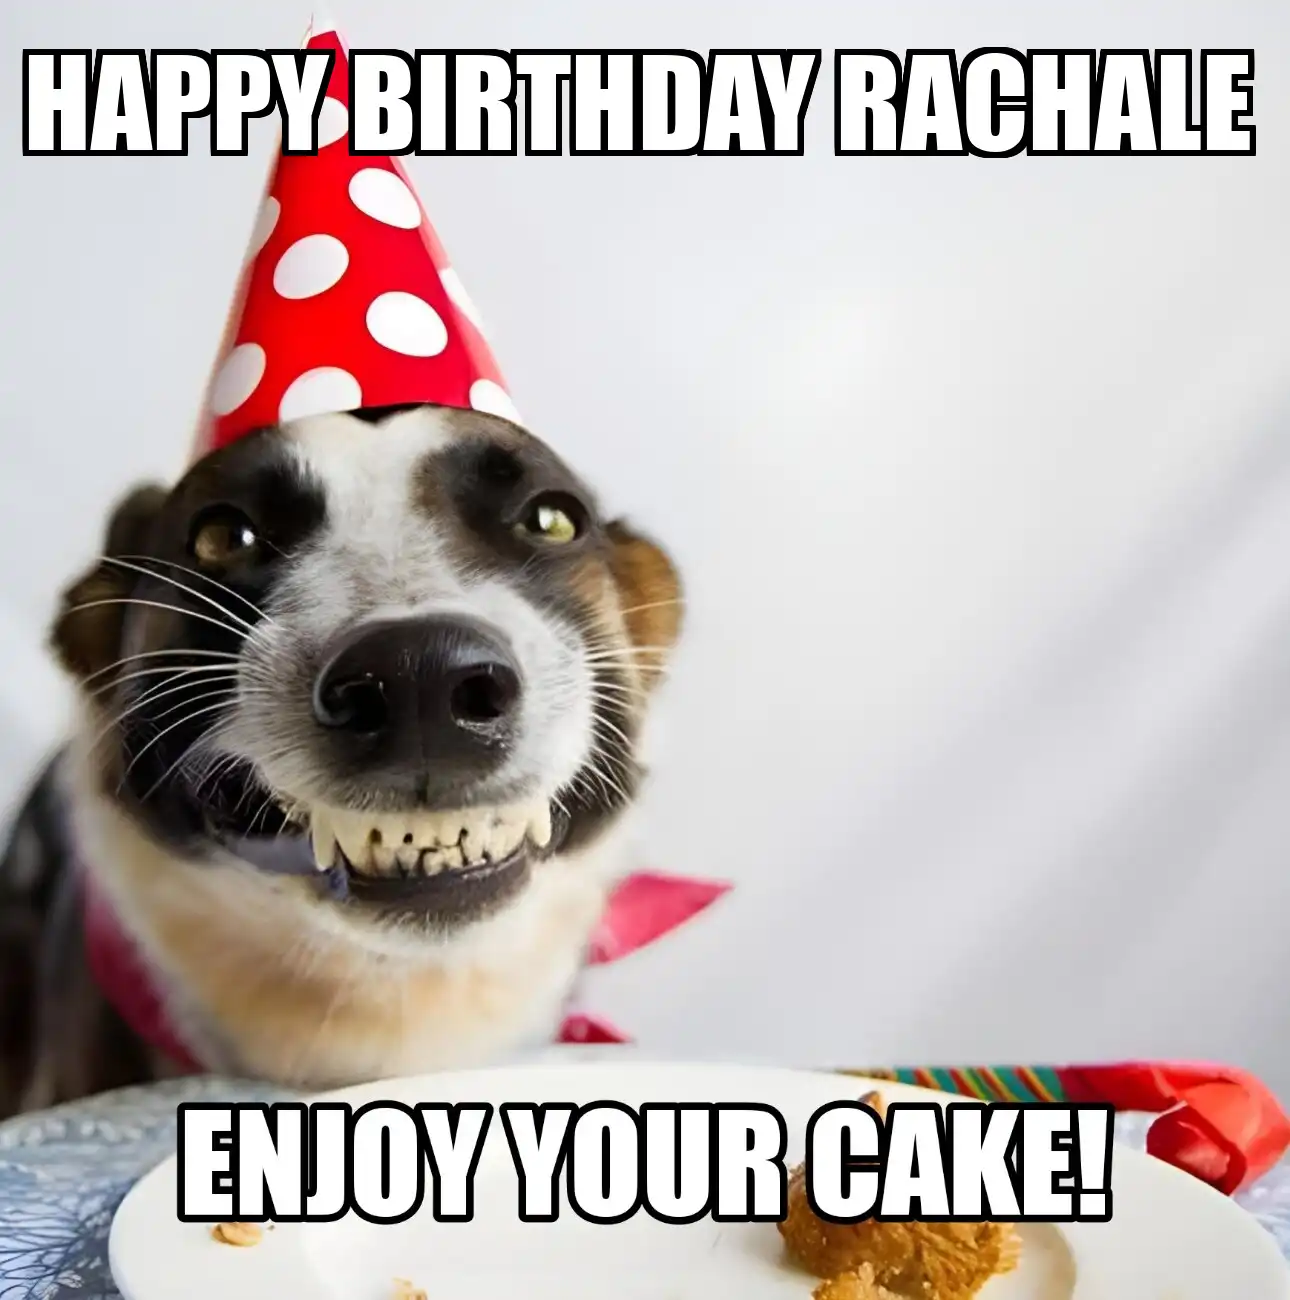 Happy Birthday Rachale Enjoy Your Cake Dog Meme